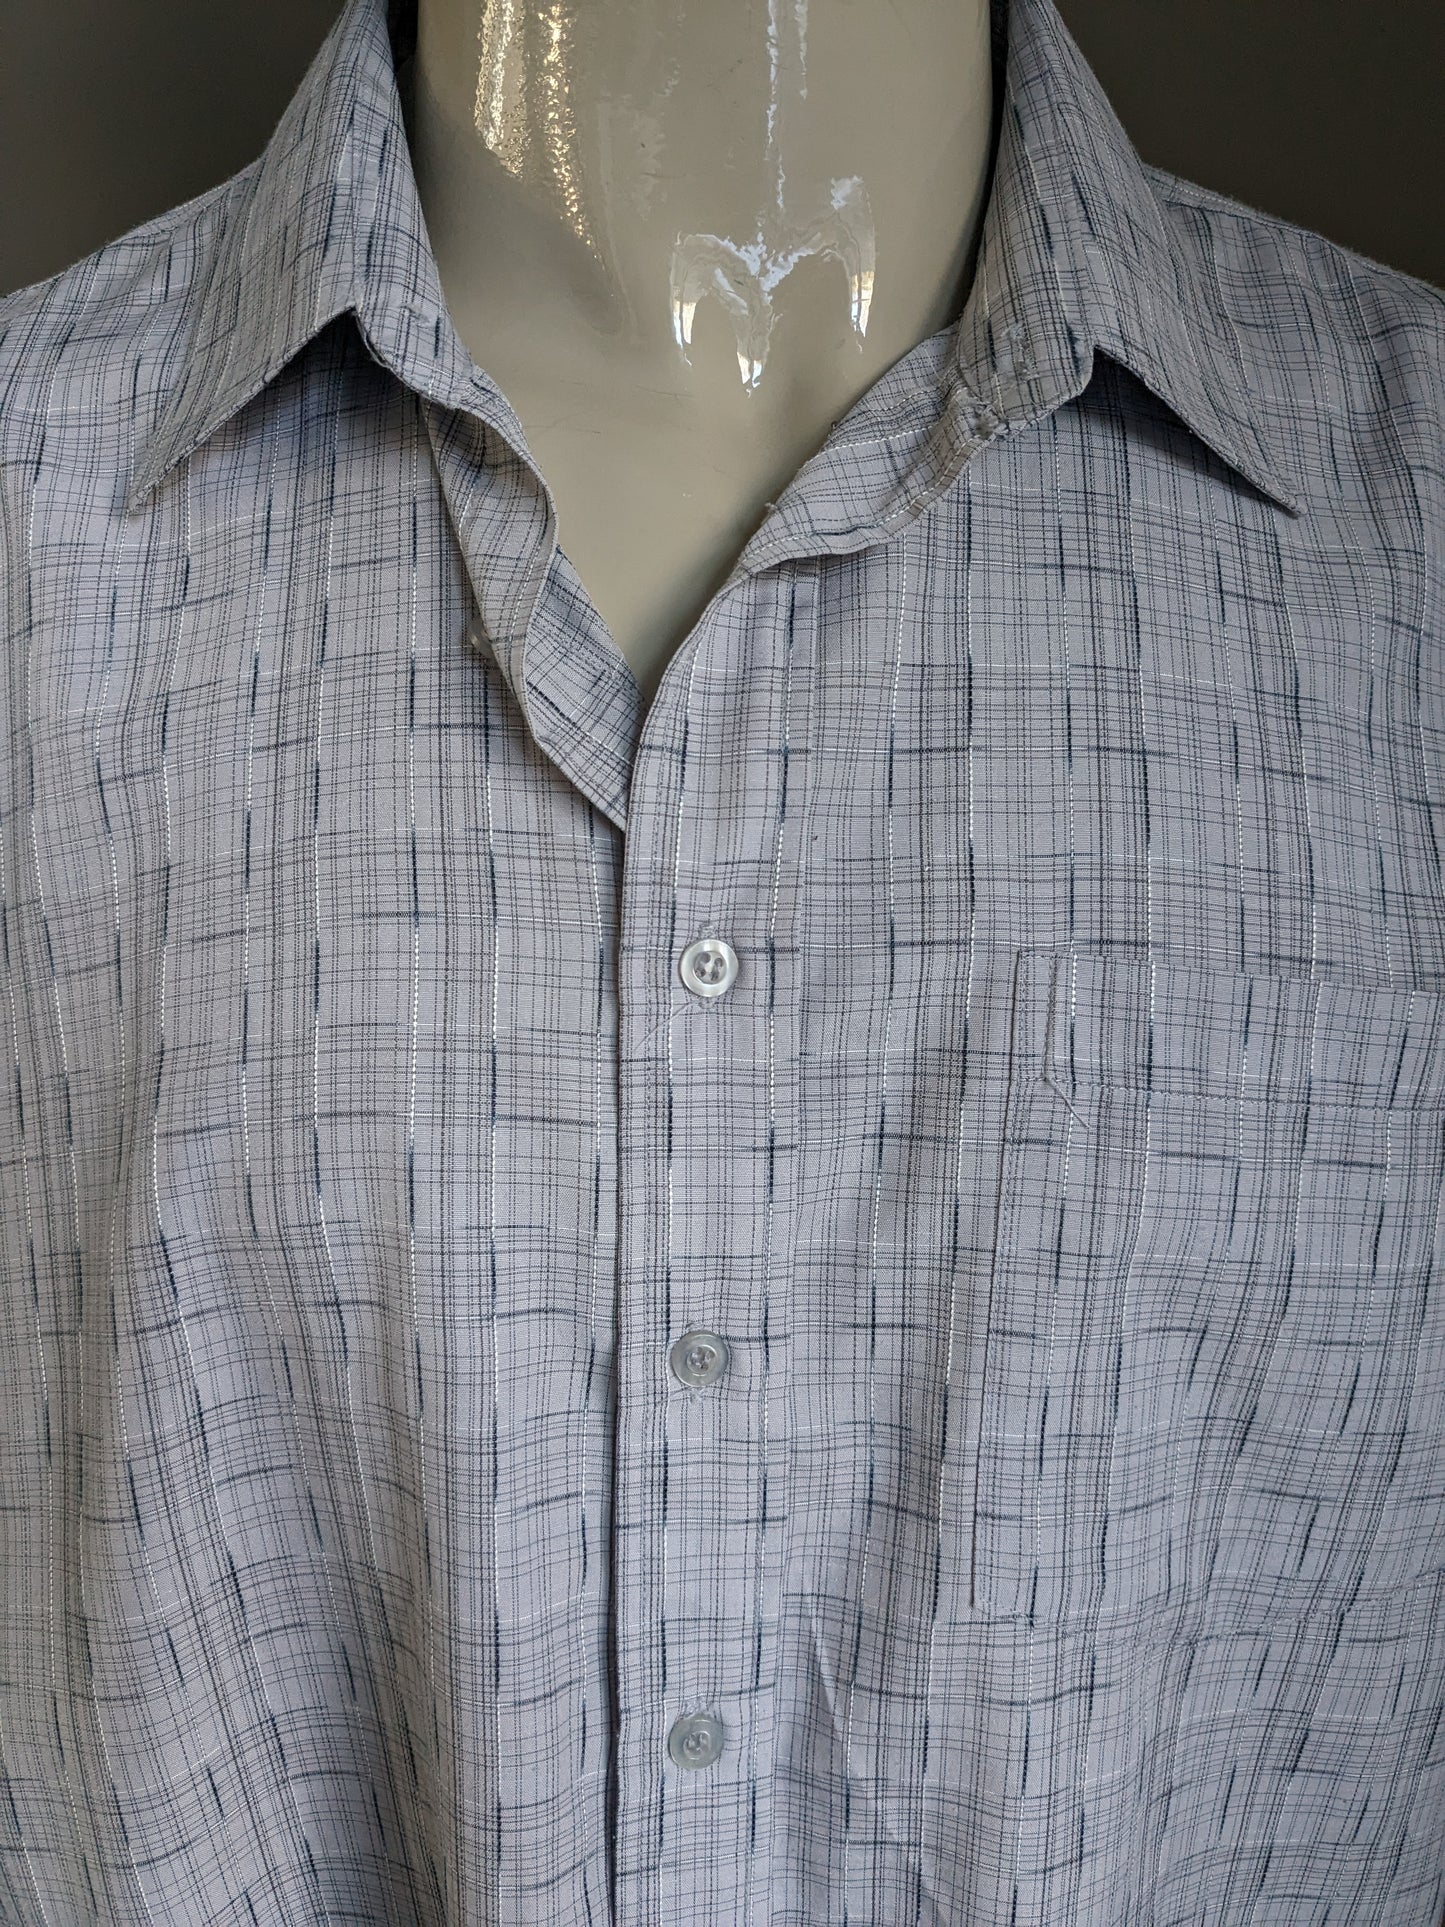 HuiMan shirt. Gray motif. Size 45/46 >> 2XL / XXL.